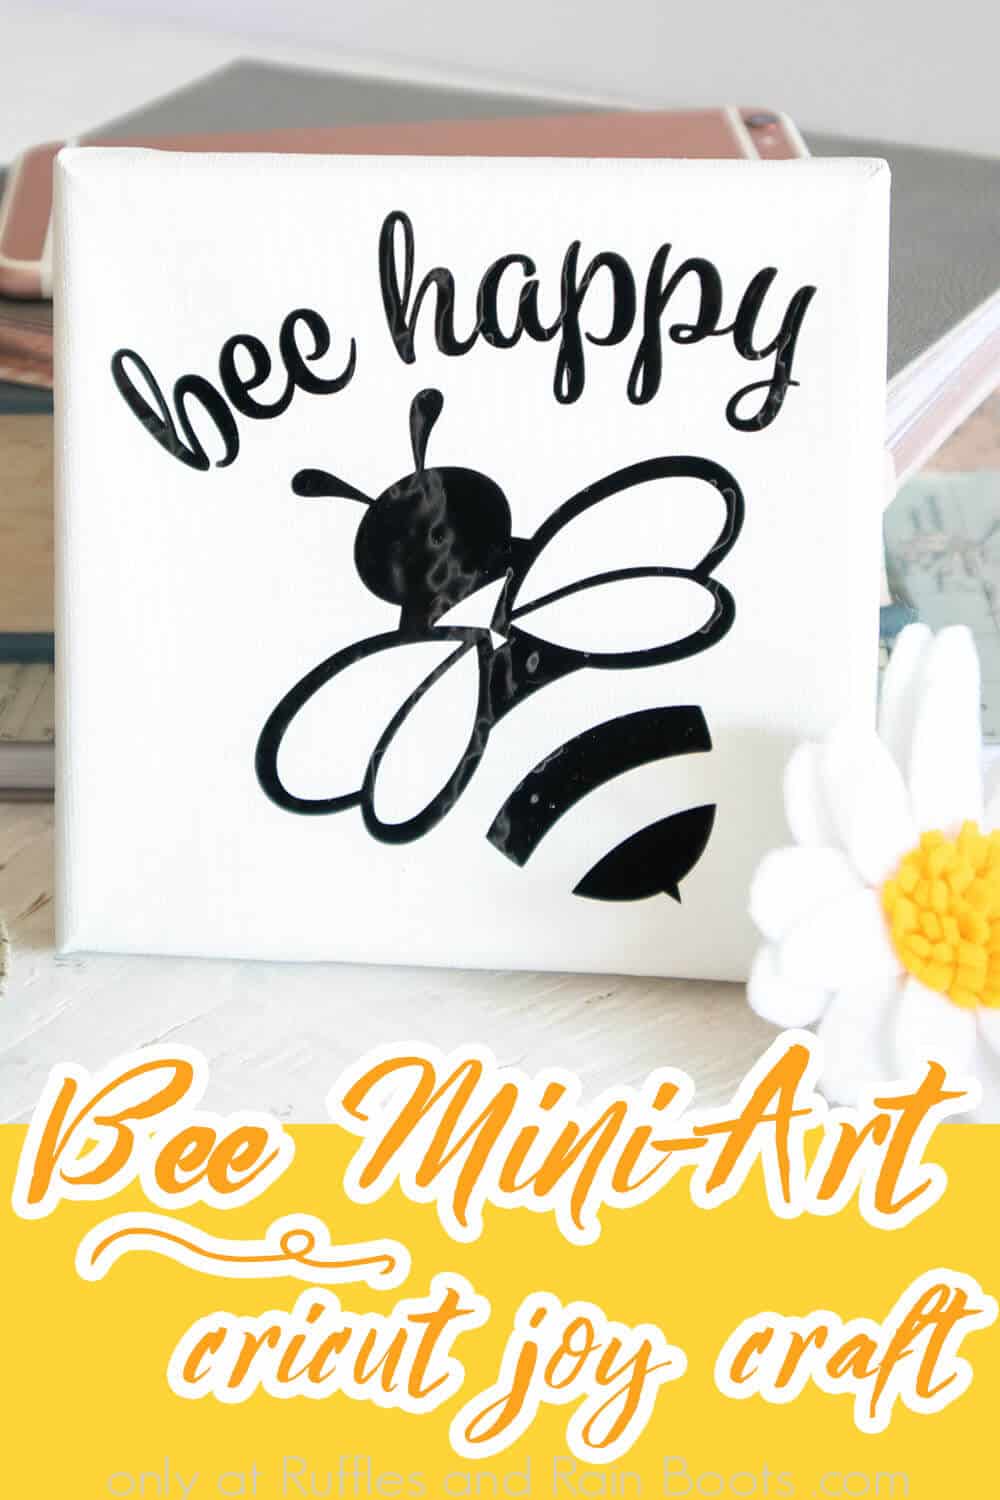 mini canvas bee art with text which reads bee mini-art cricut joy craft